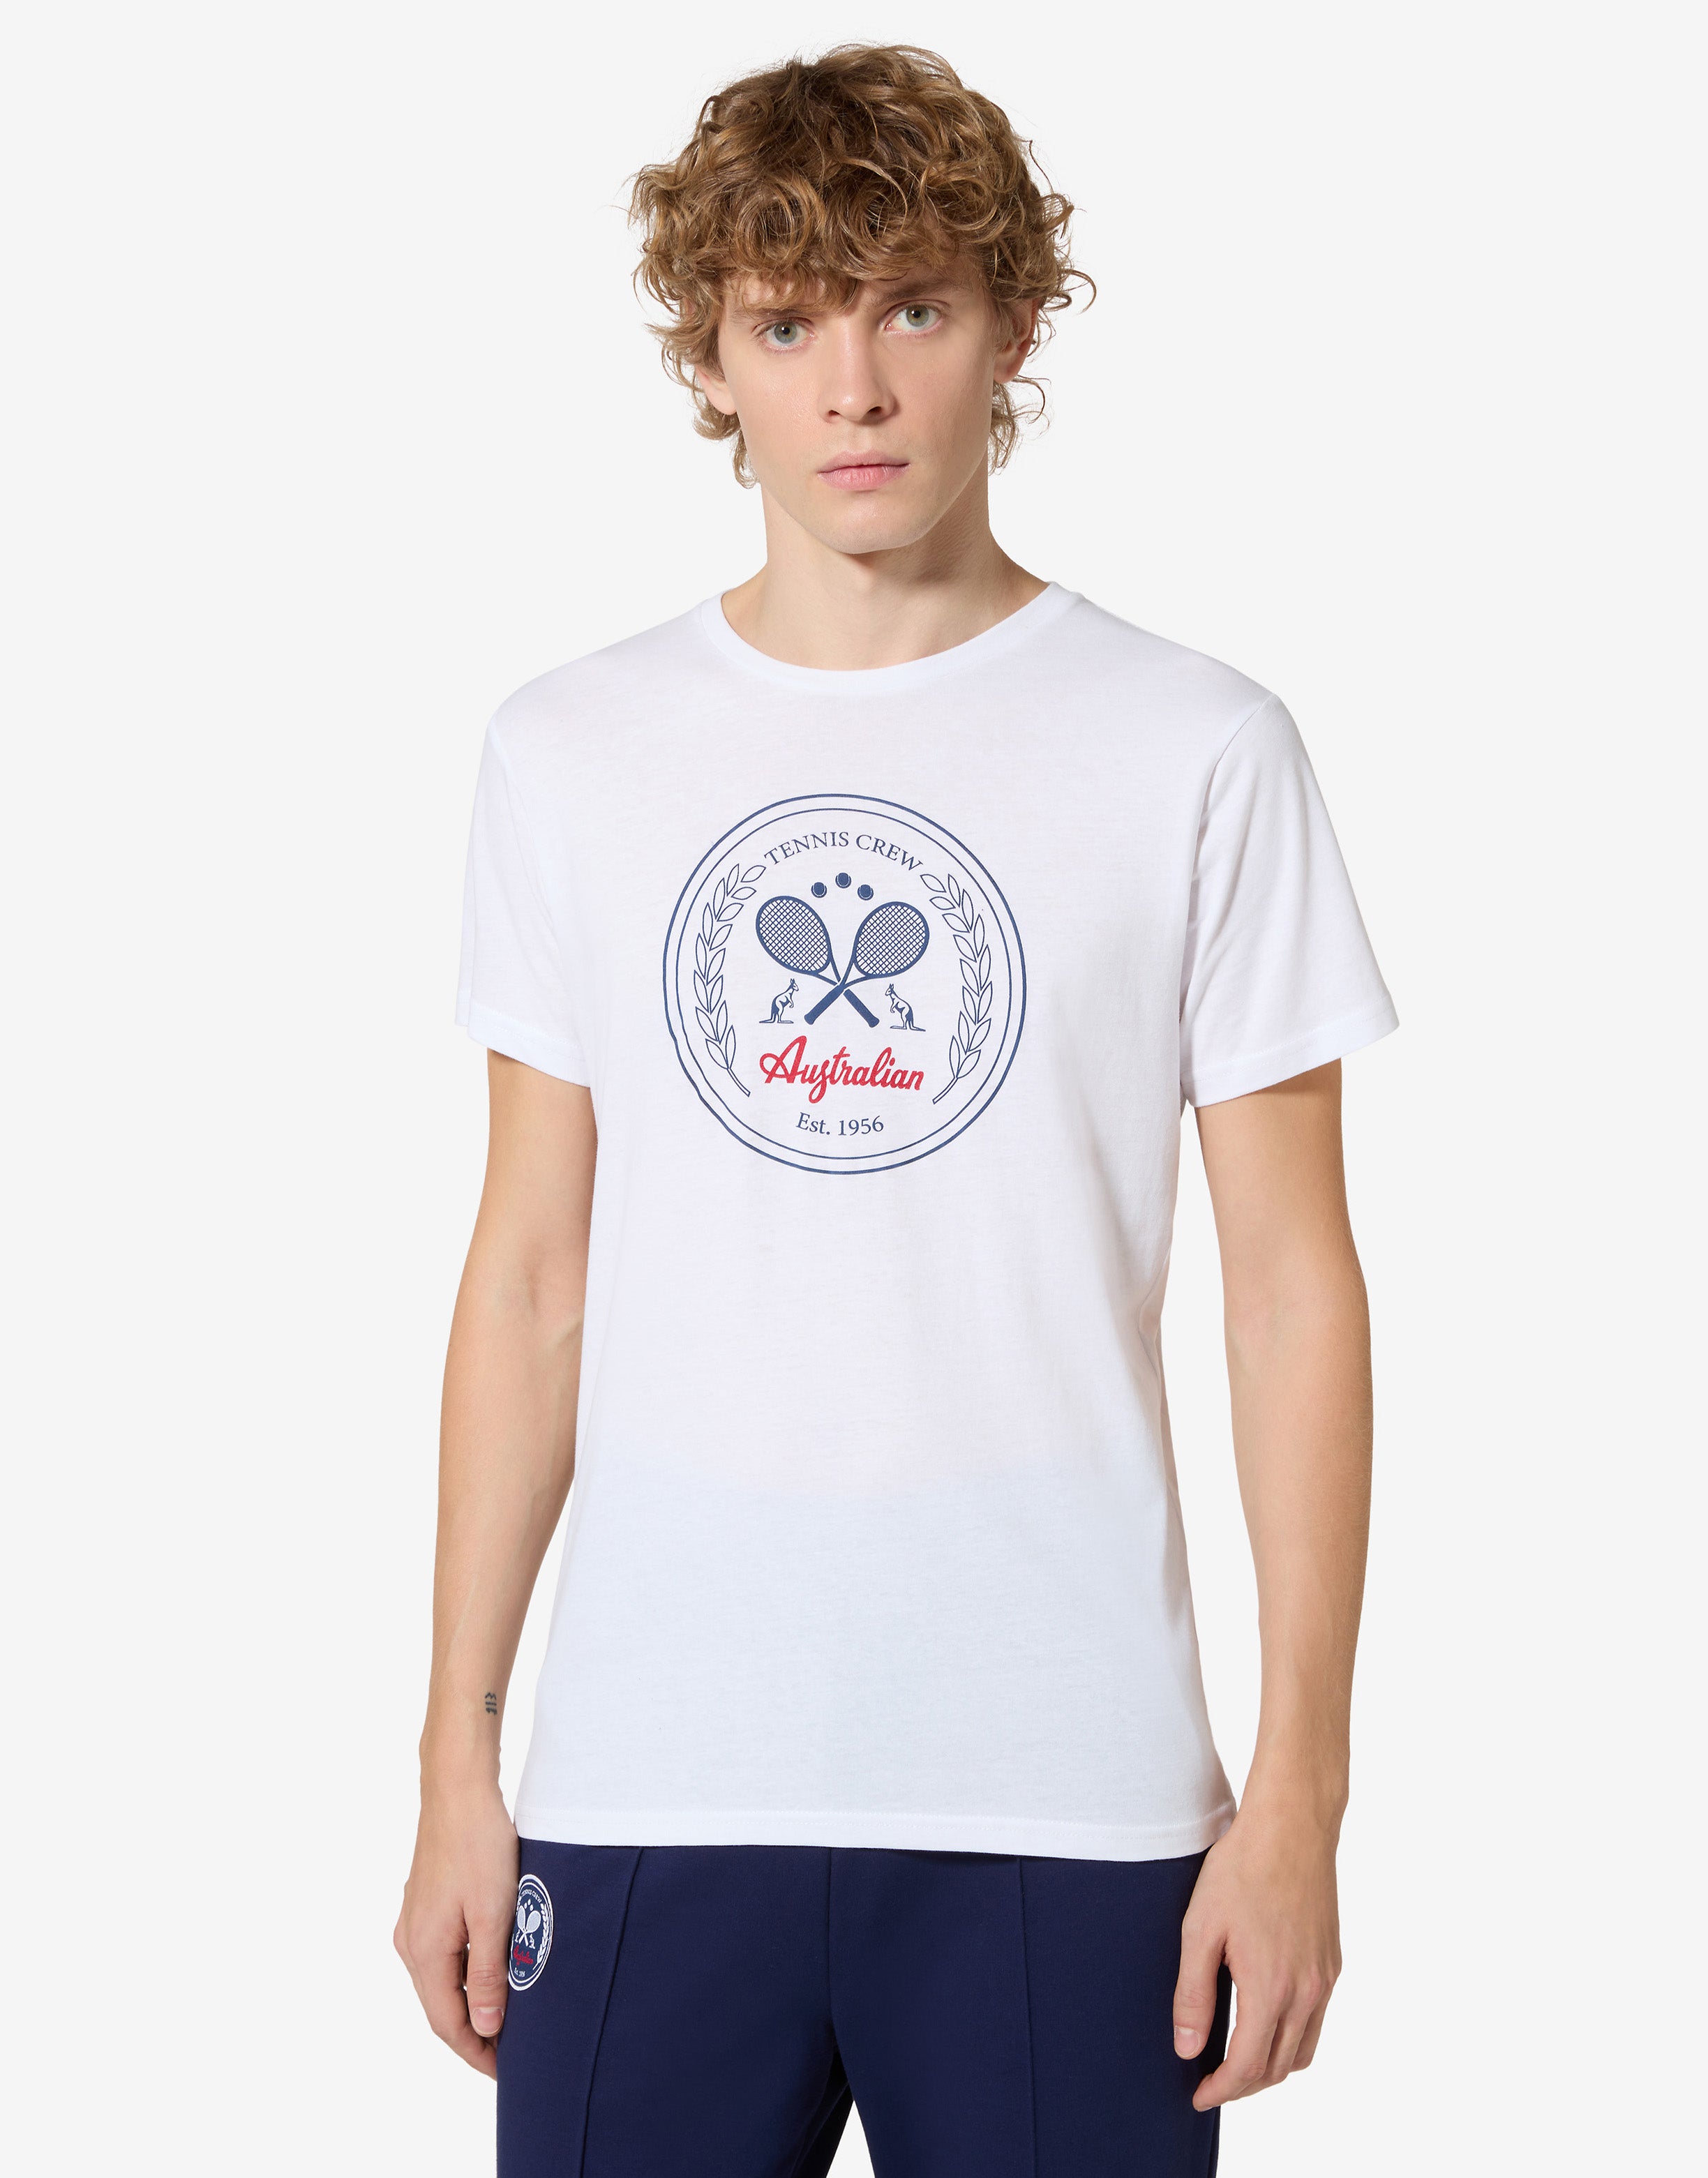 Tennis Crew T-shirt